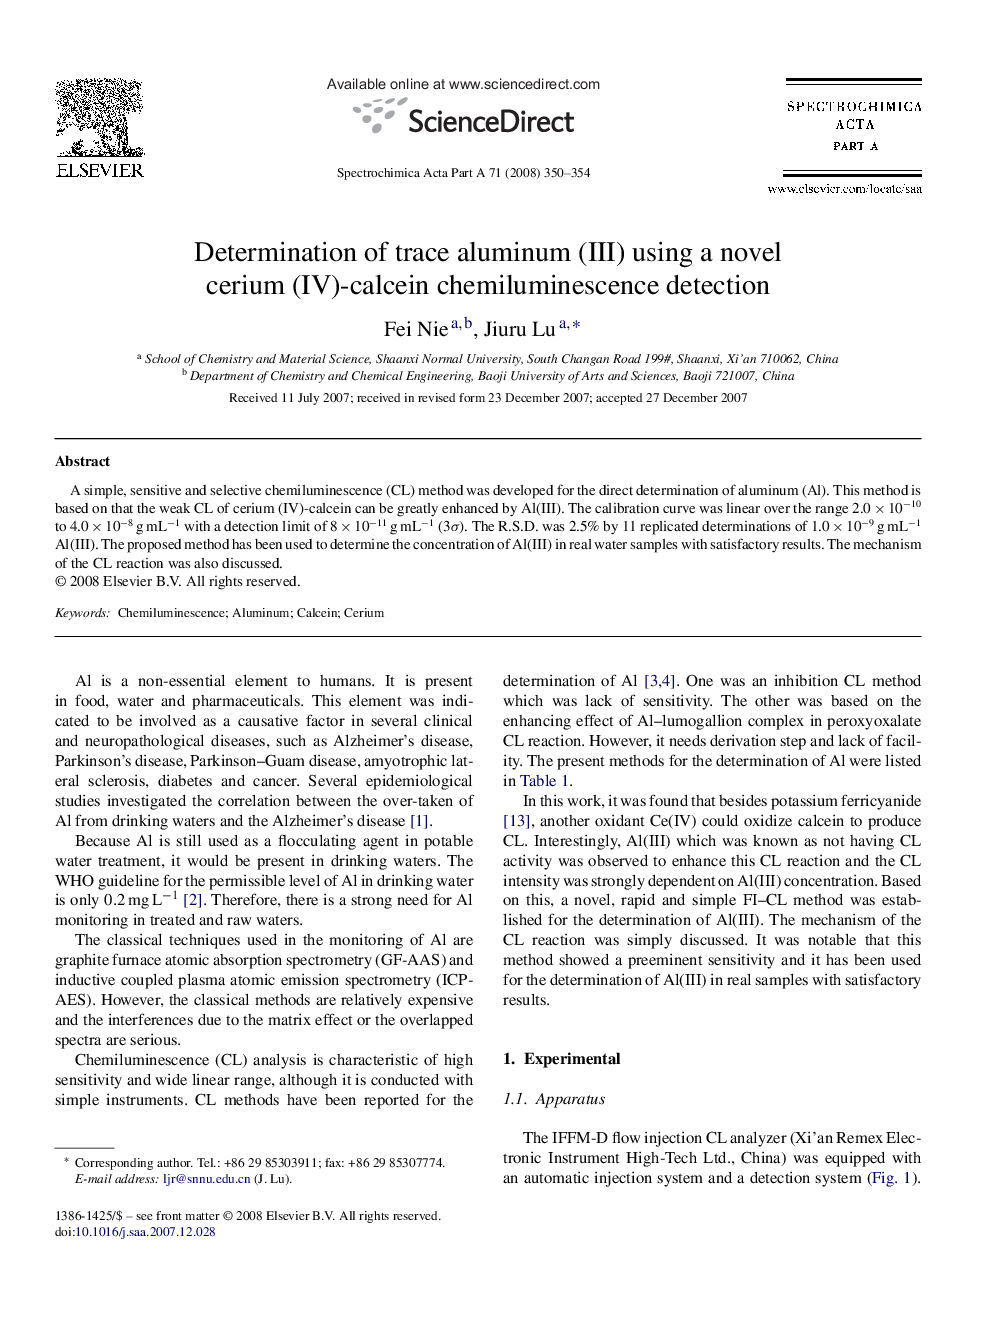 Determination of trace aluminum (III) using a novel cerium (IV)-calcein chemiluminescence detection